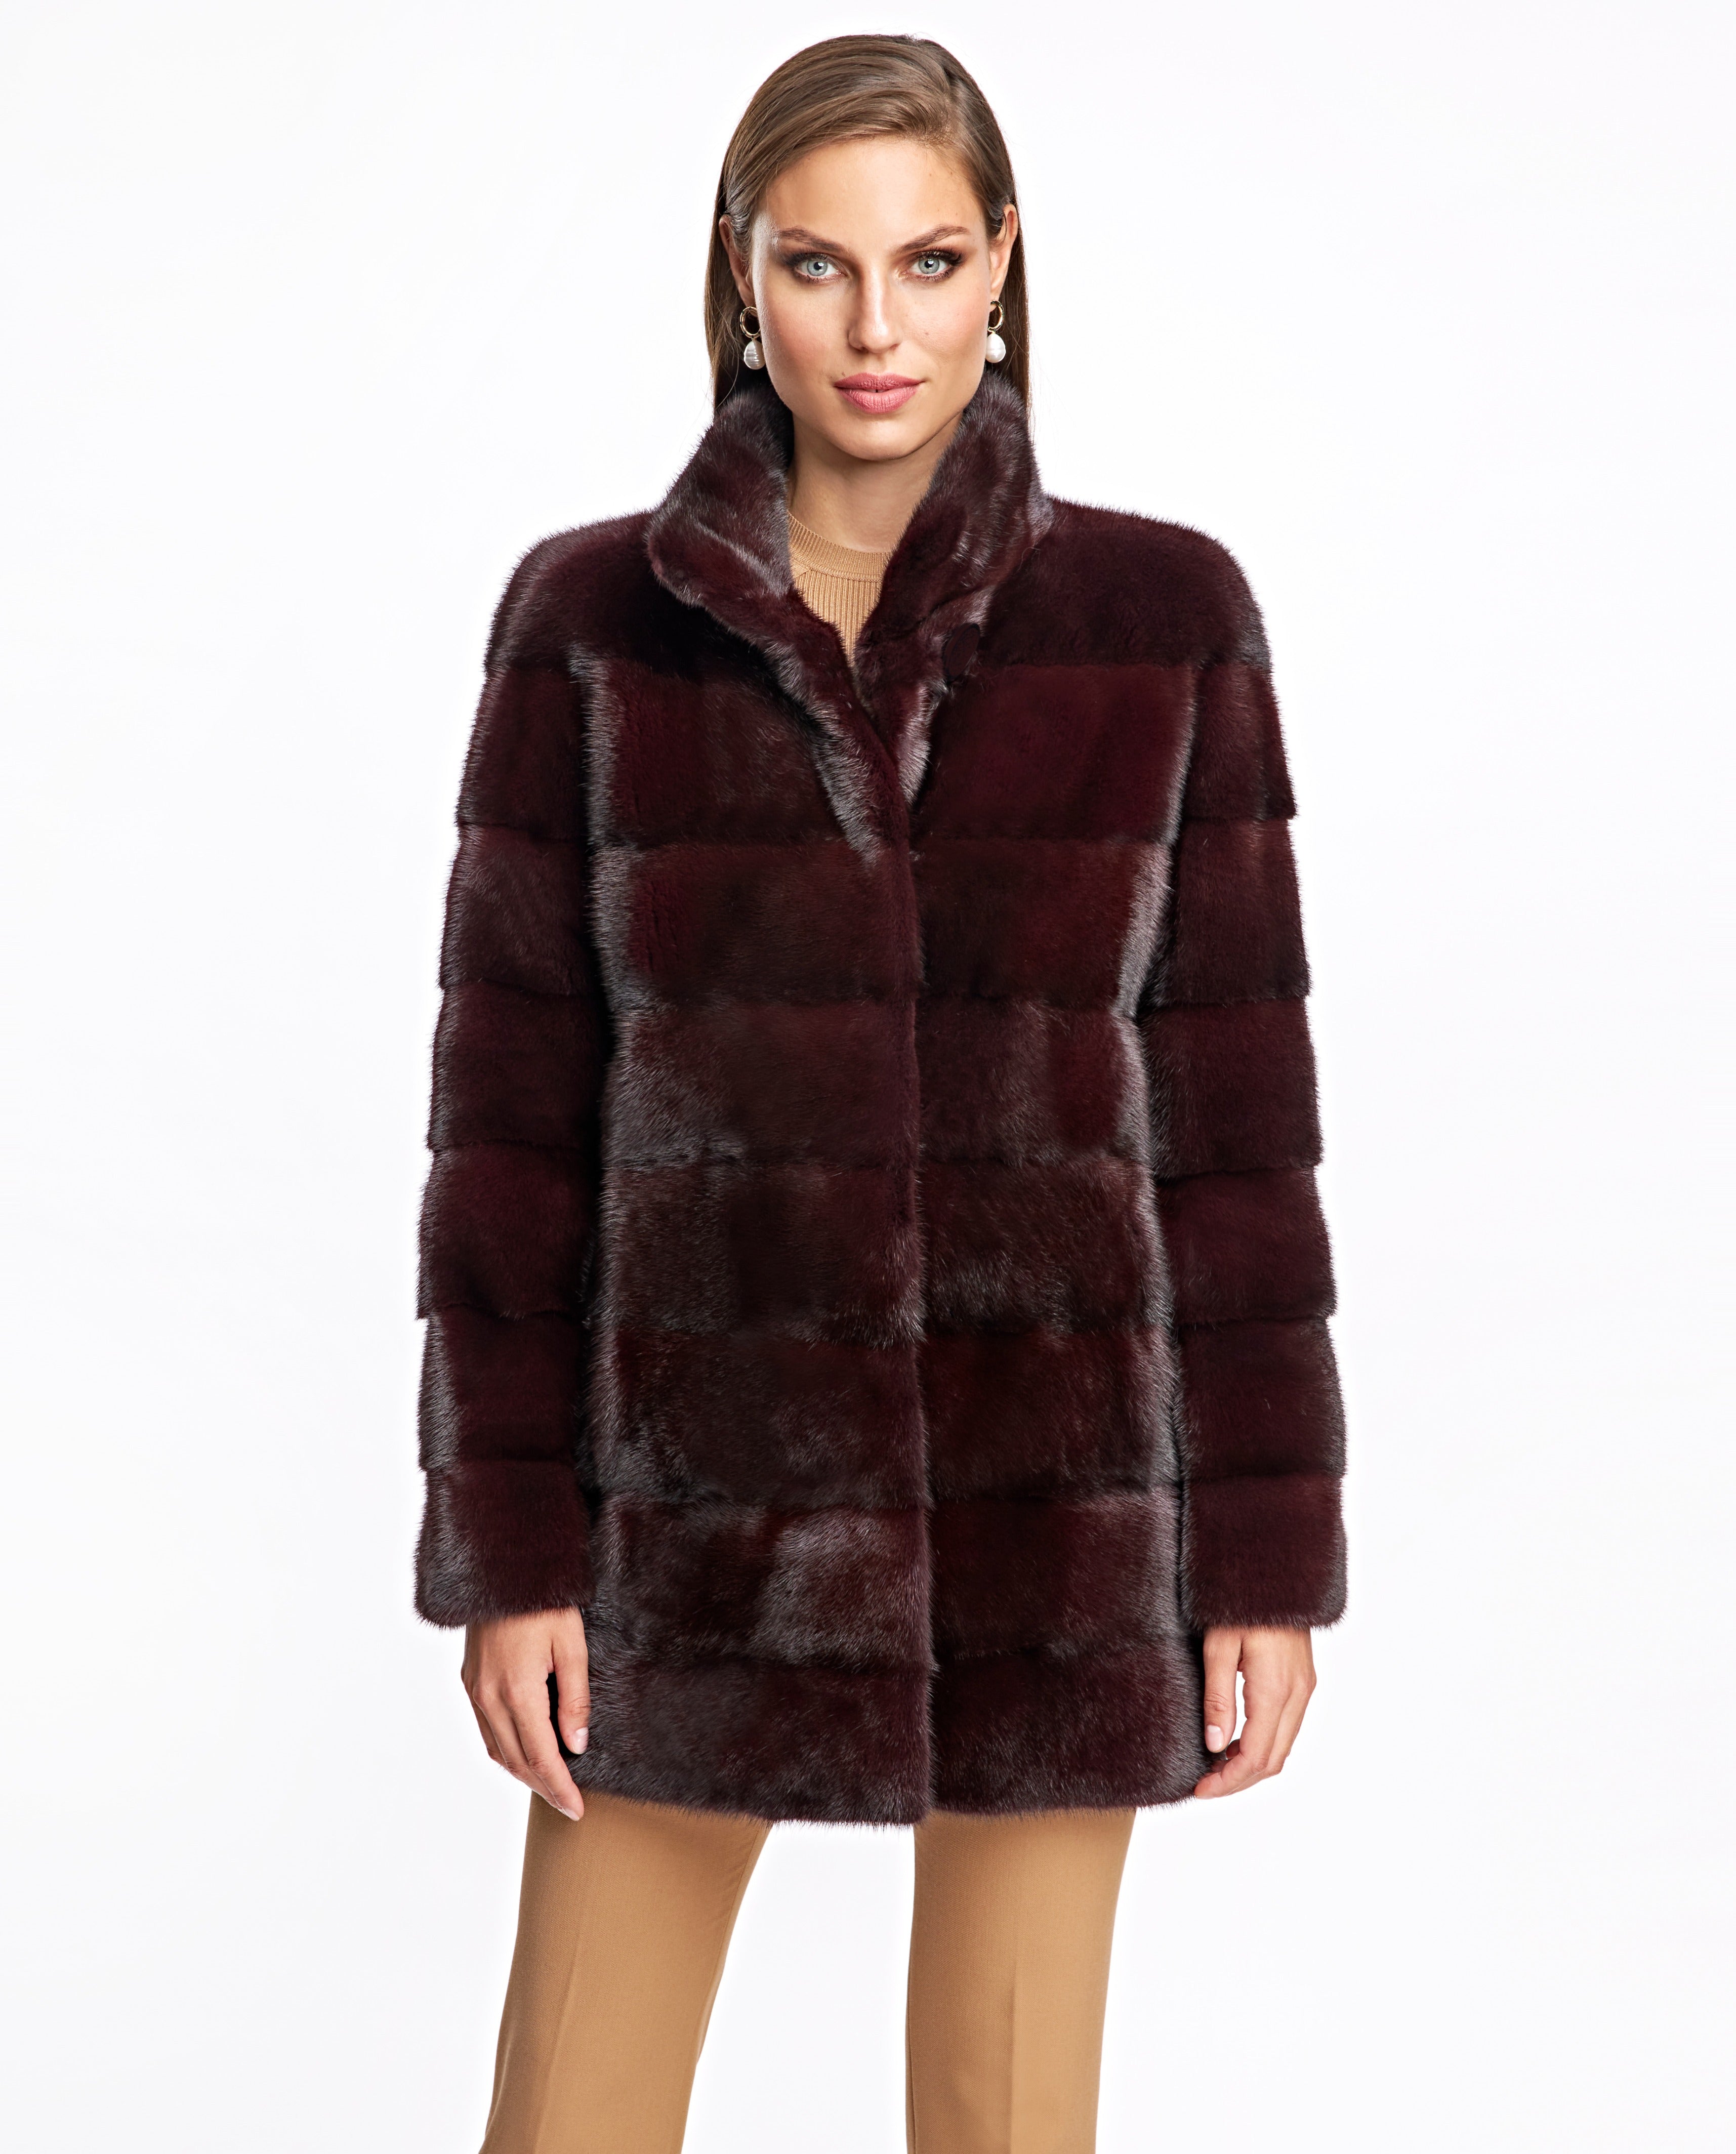 Mink Coats For Sale, Real Mink Coat For Women's, Full Length Mink Coat ...